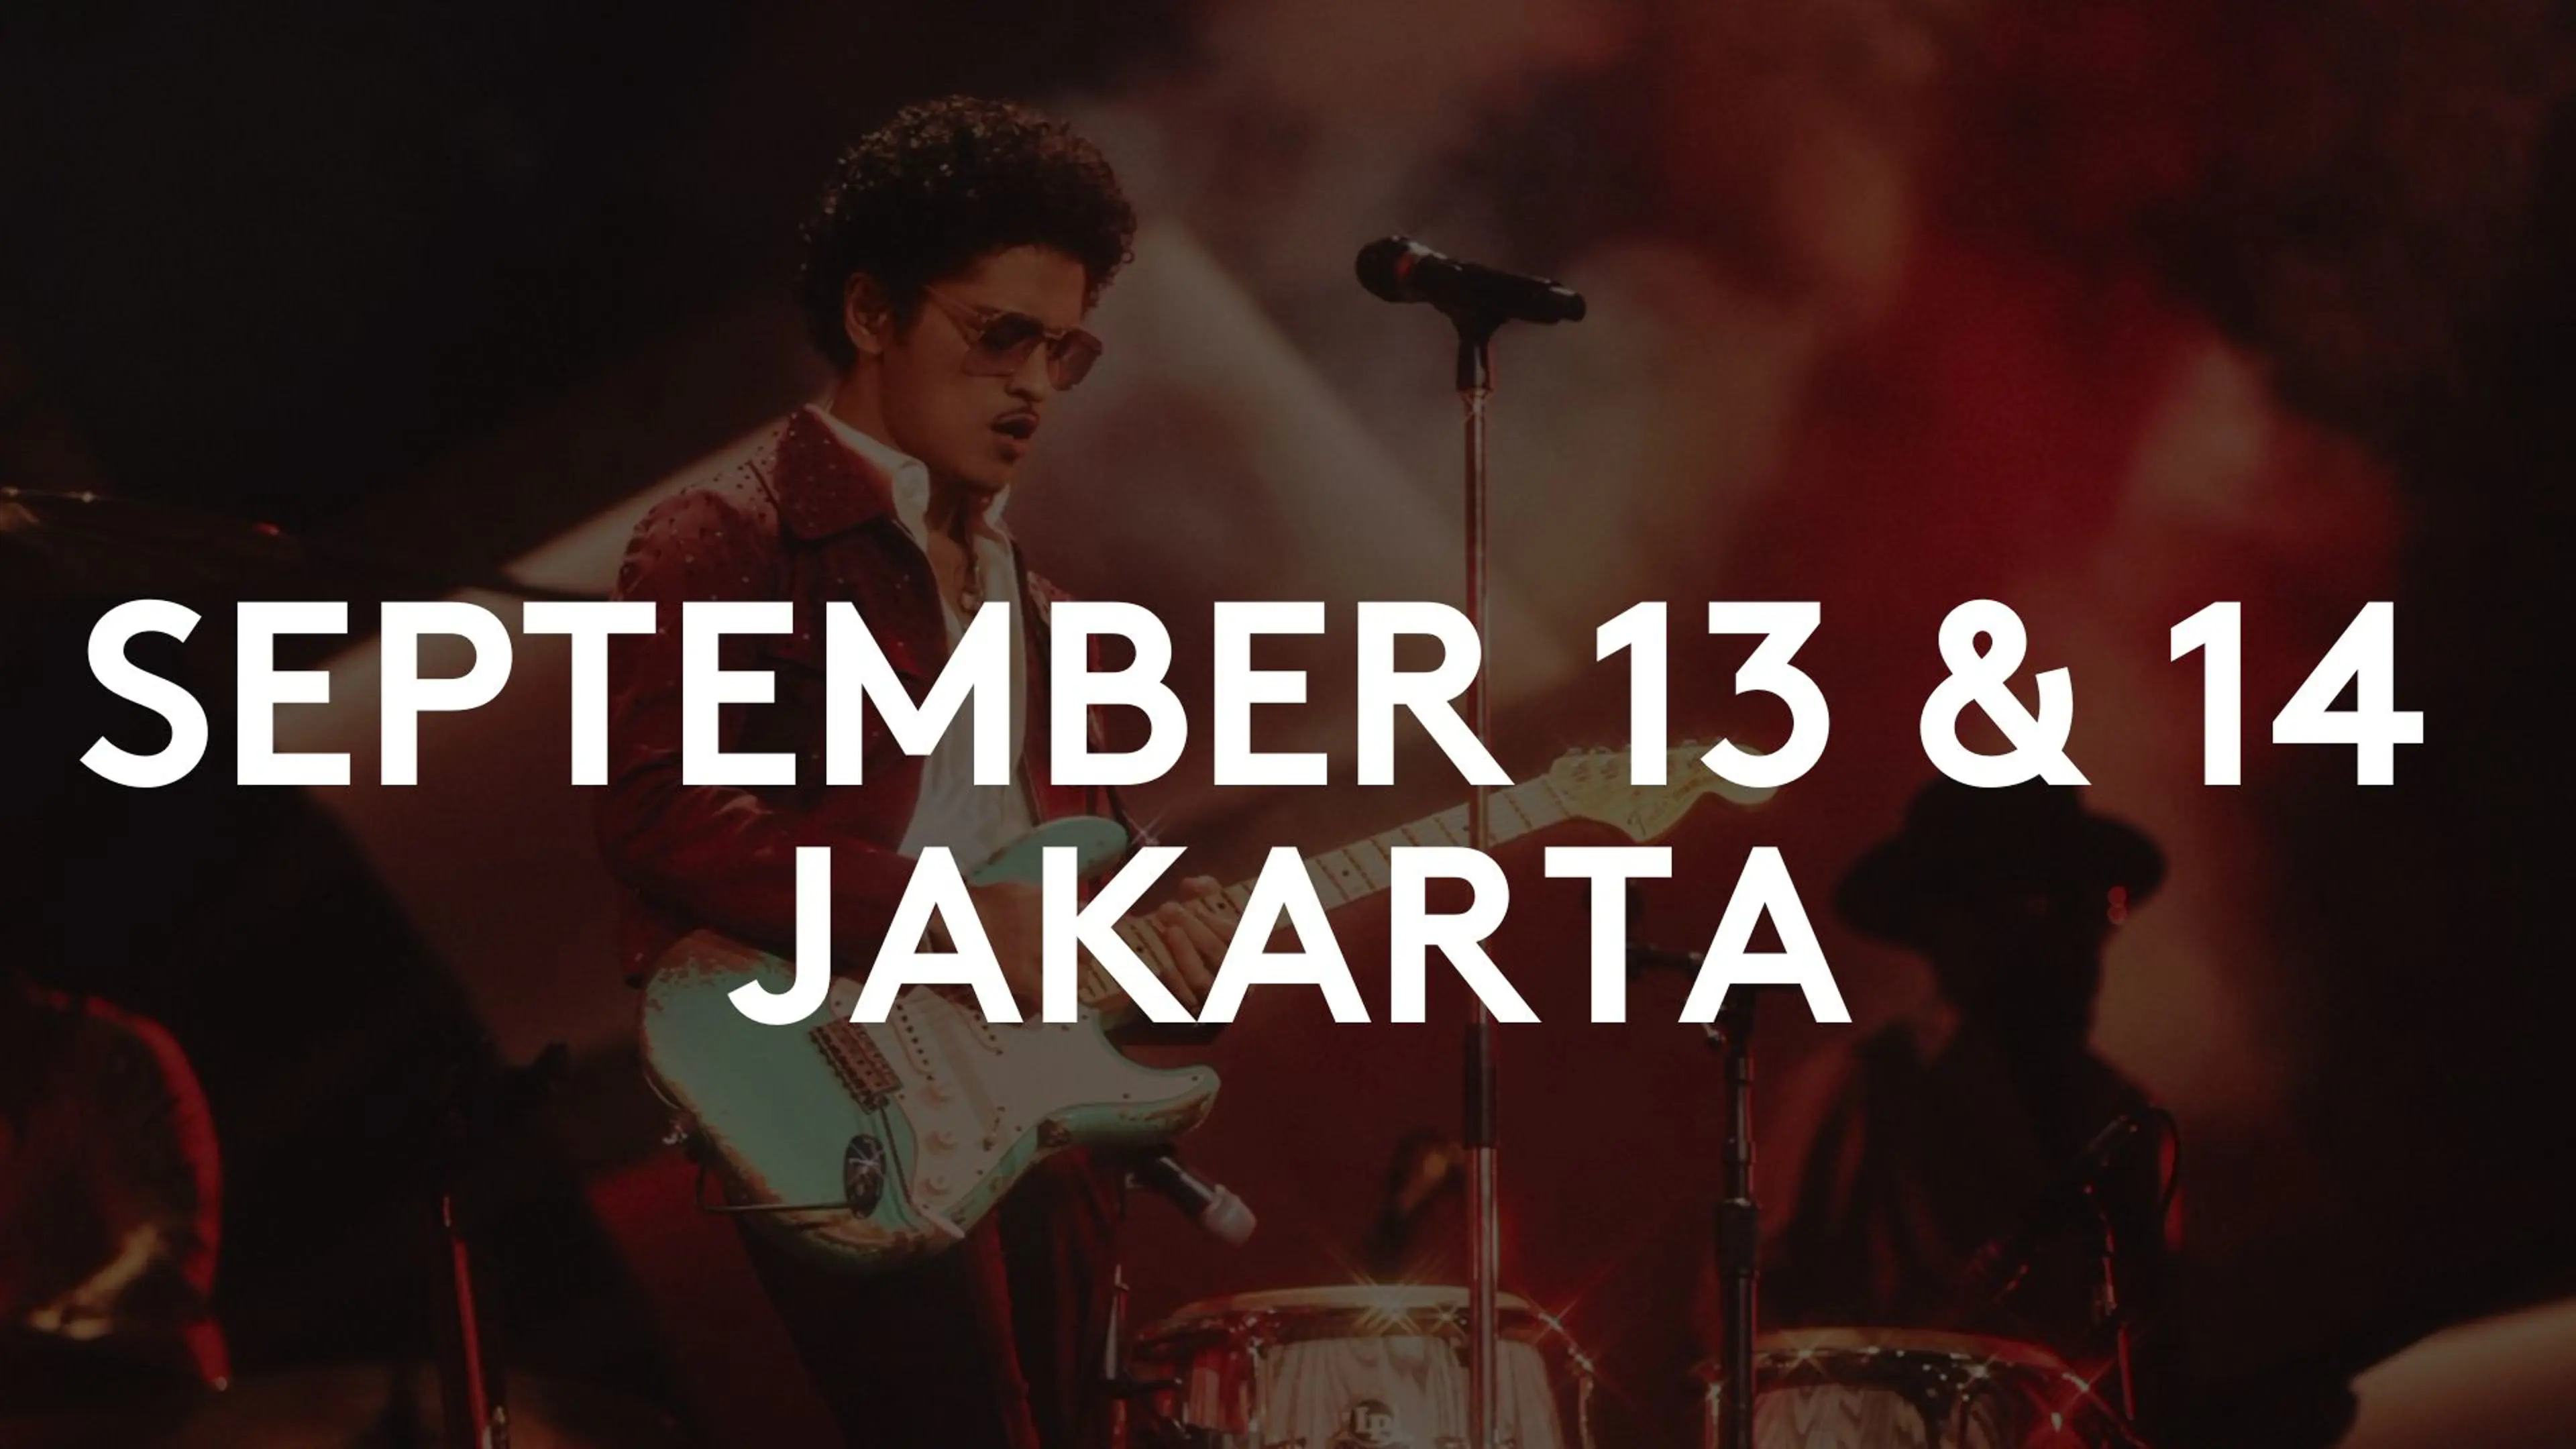 Bruno Mars Live In Jakarta